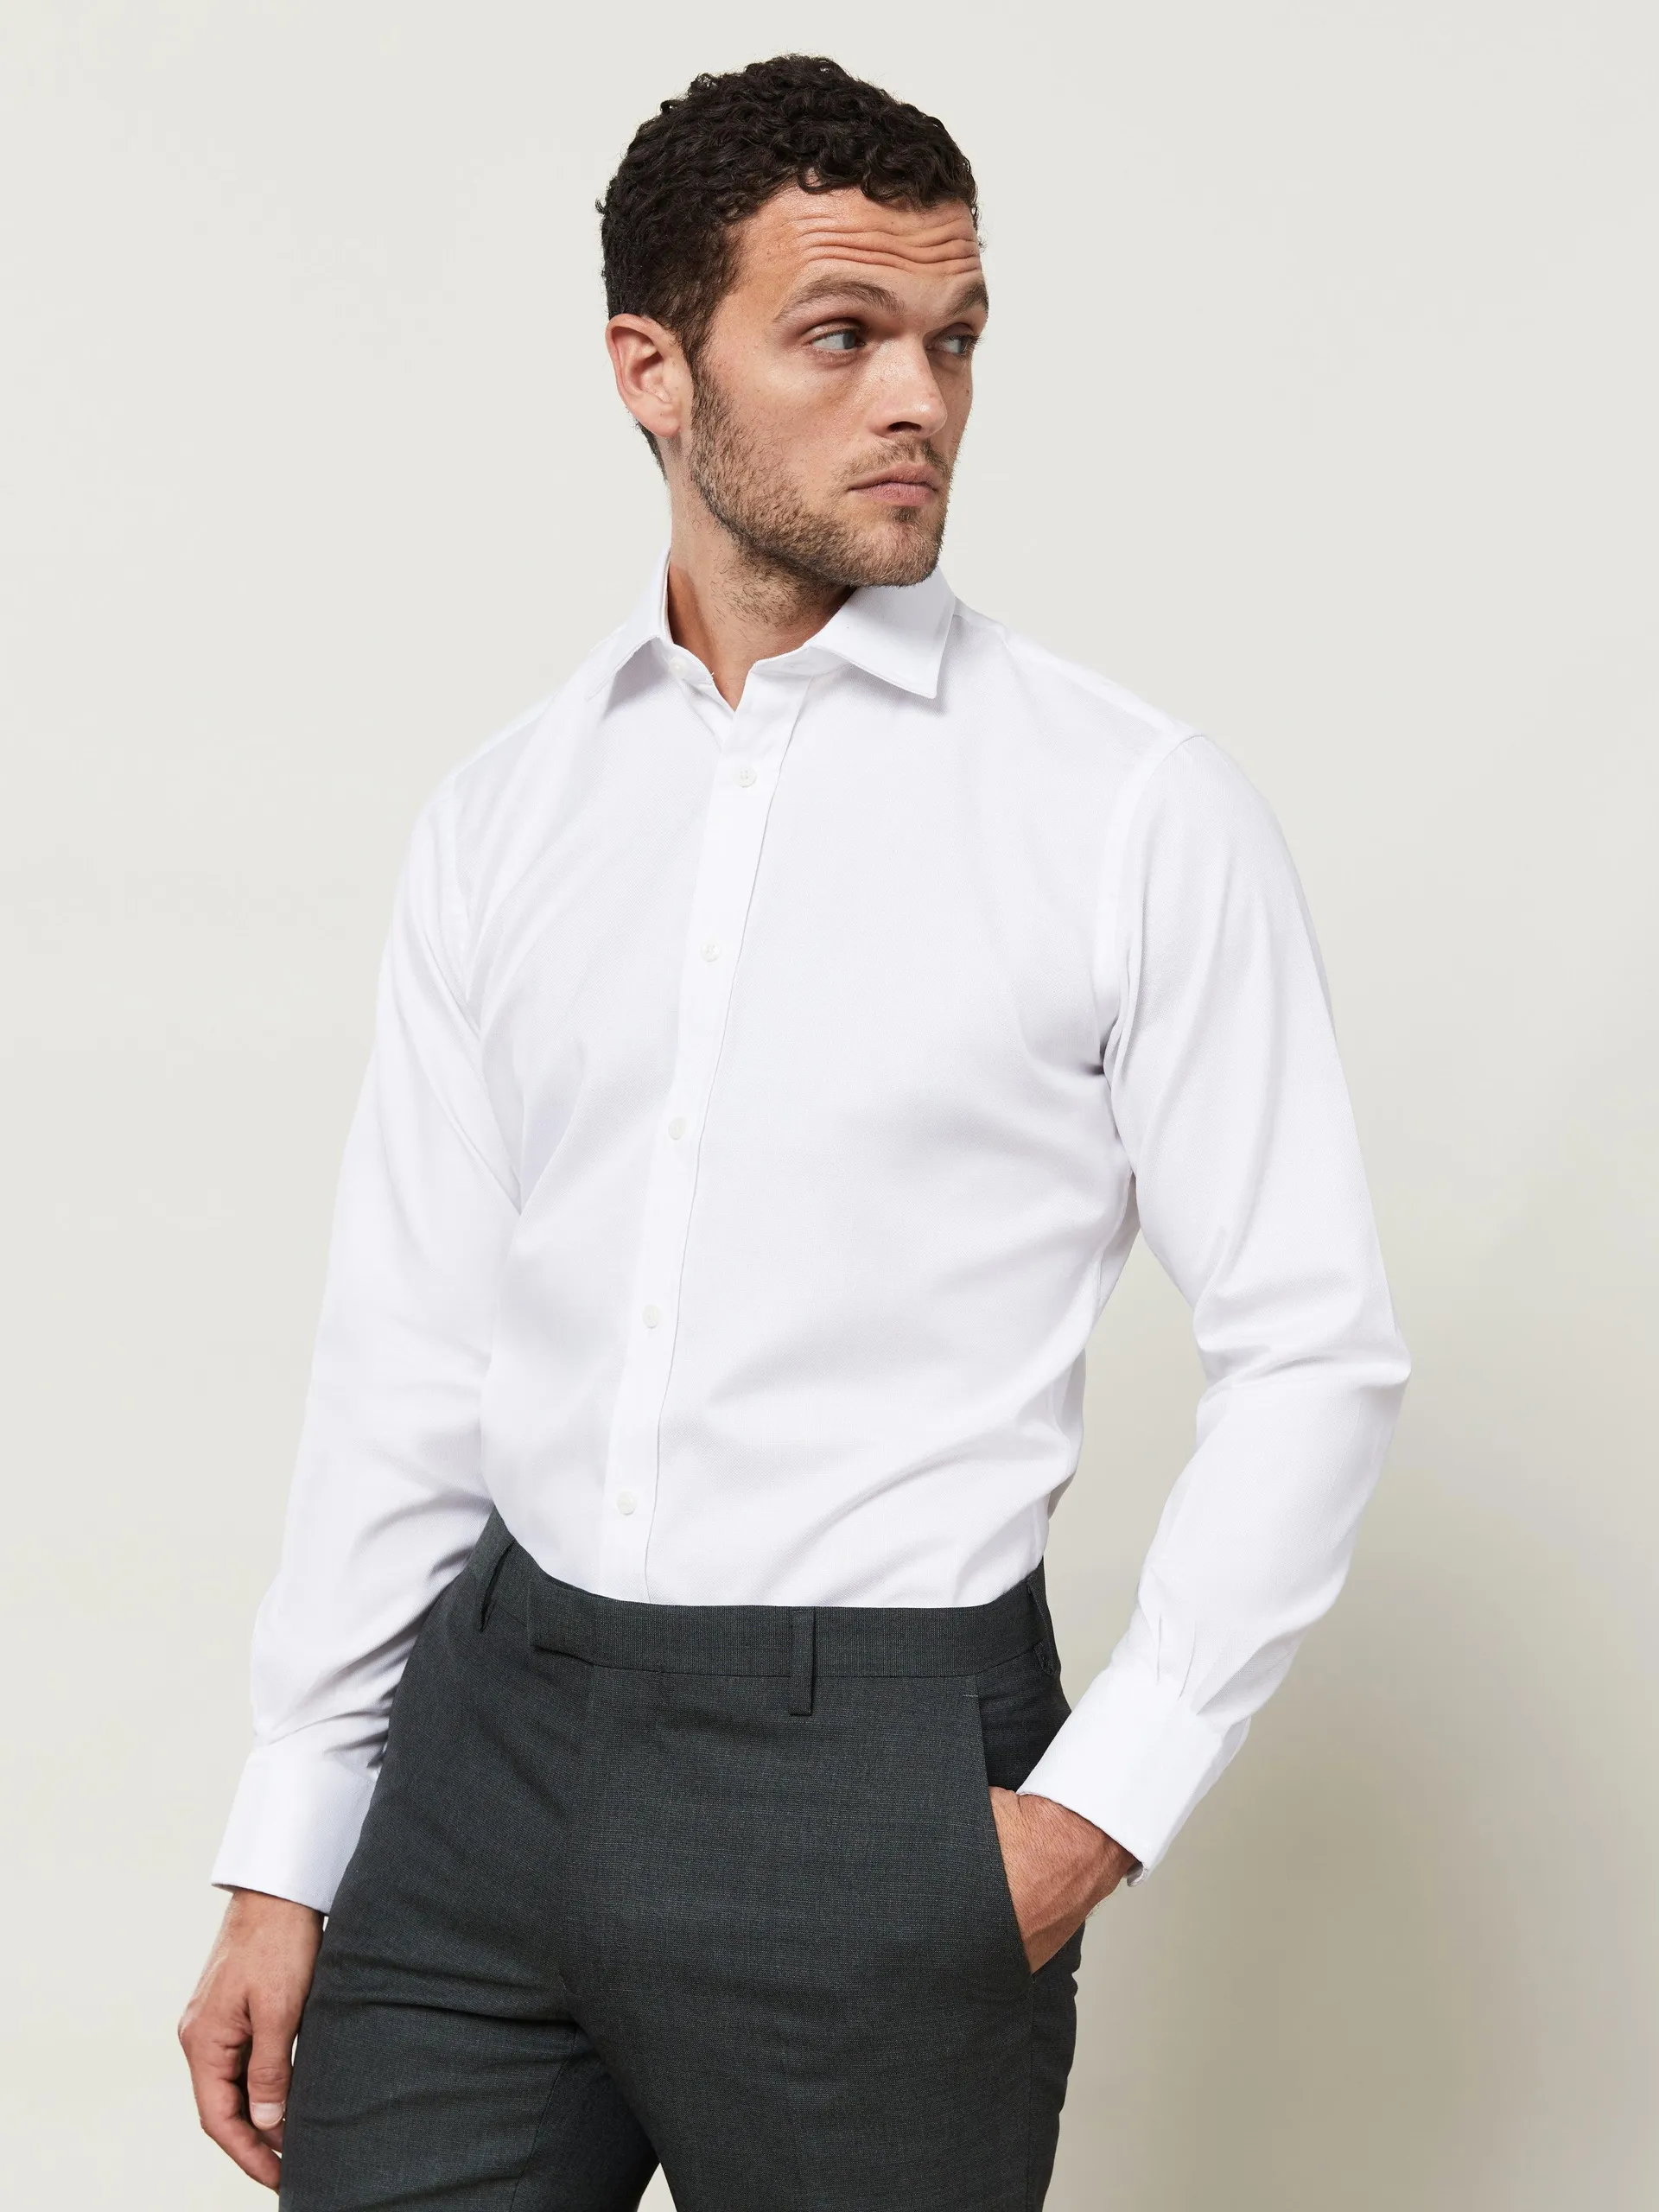 Fitted Plain White Oxford Button Cuff Shirt